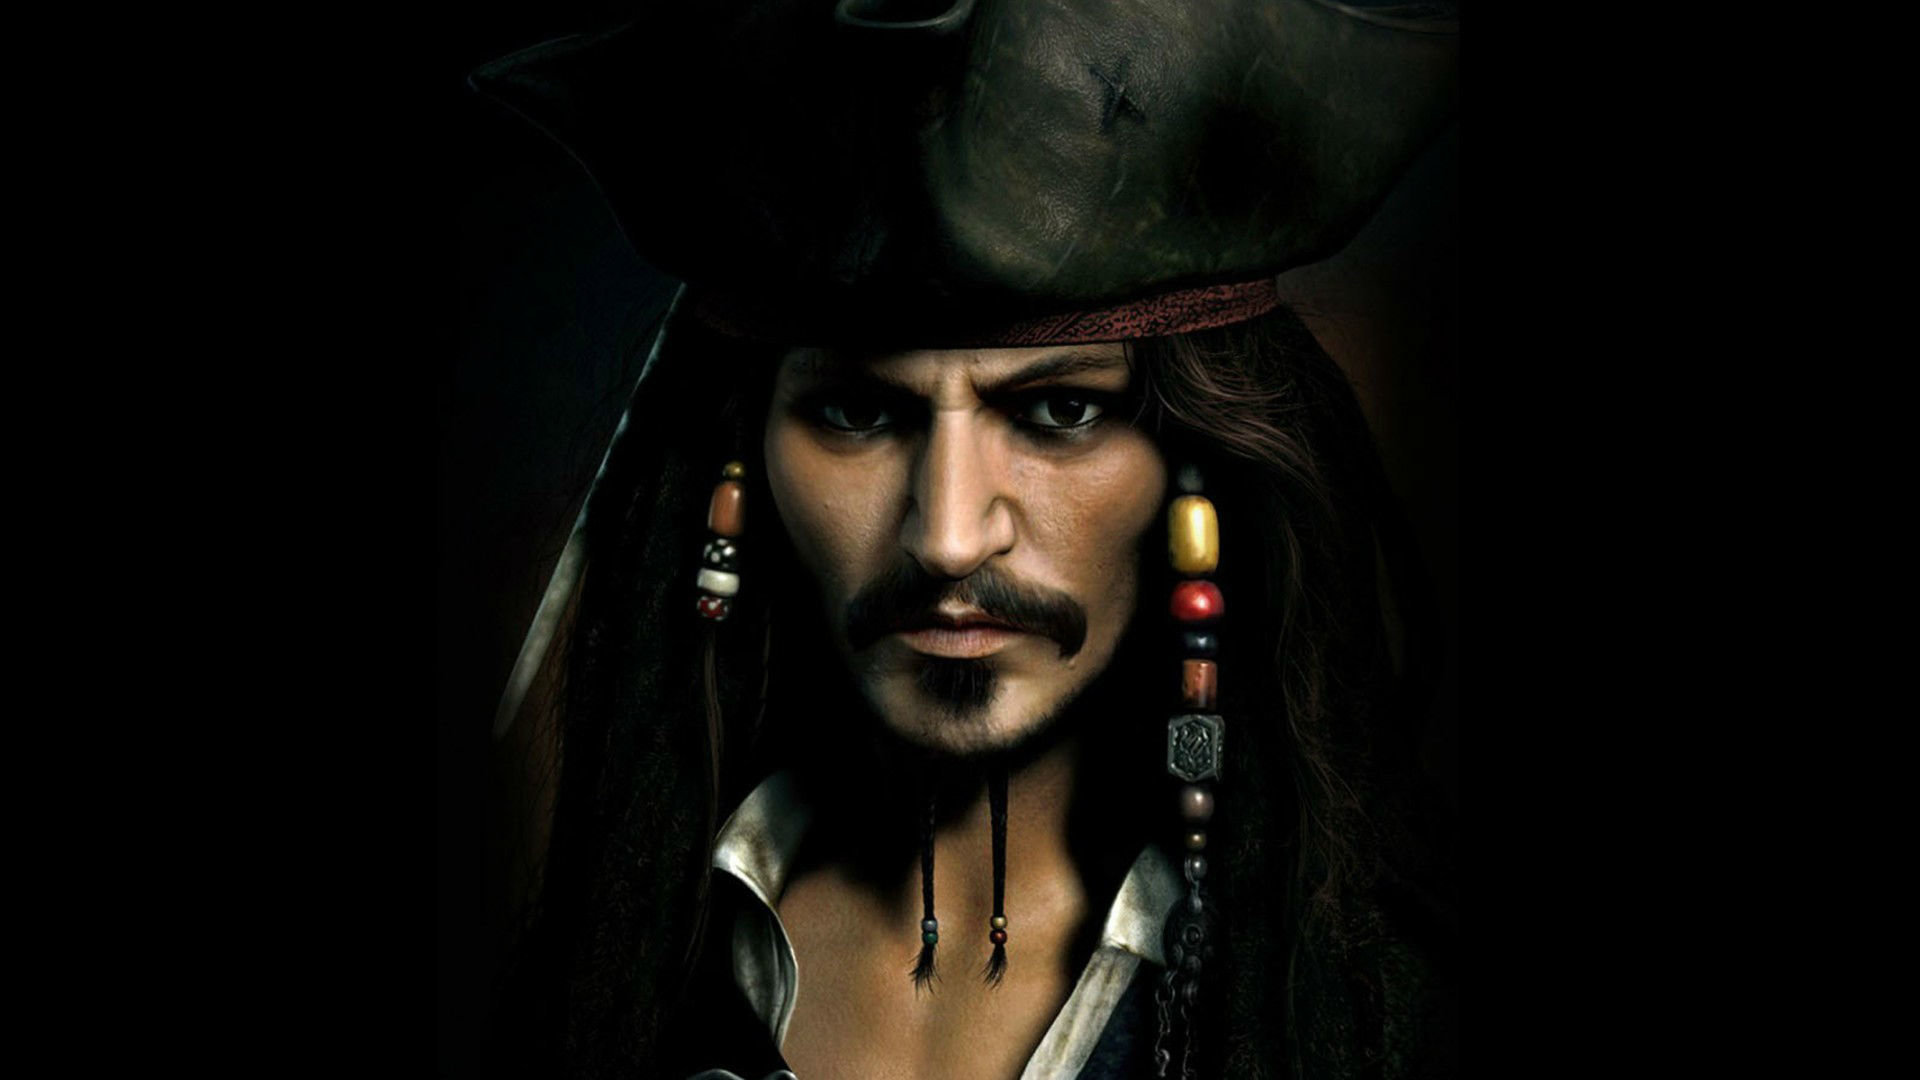 Pirates Of The Caribbean wallpaper 1920x1080 Full HD (1080p) desktop background